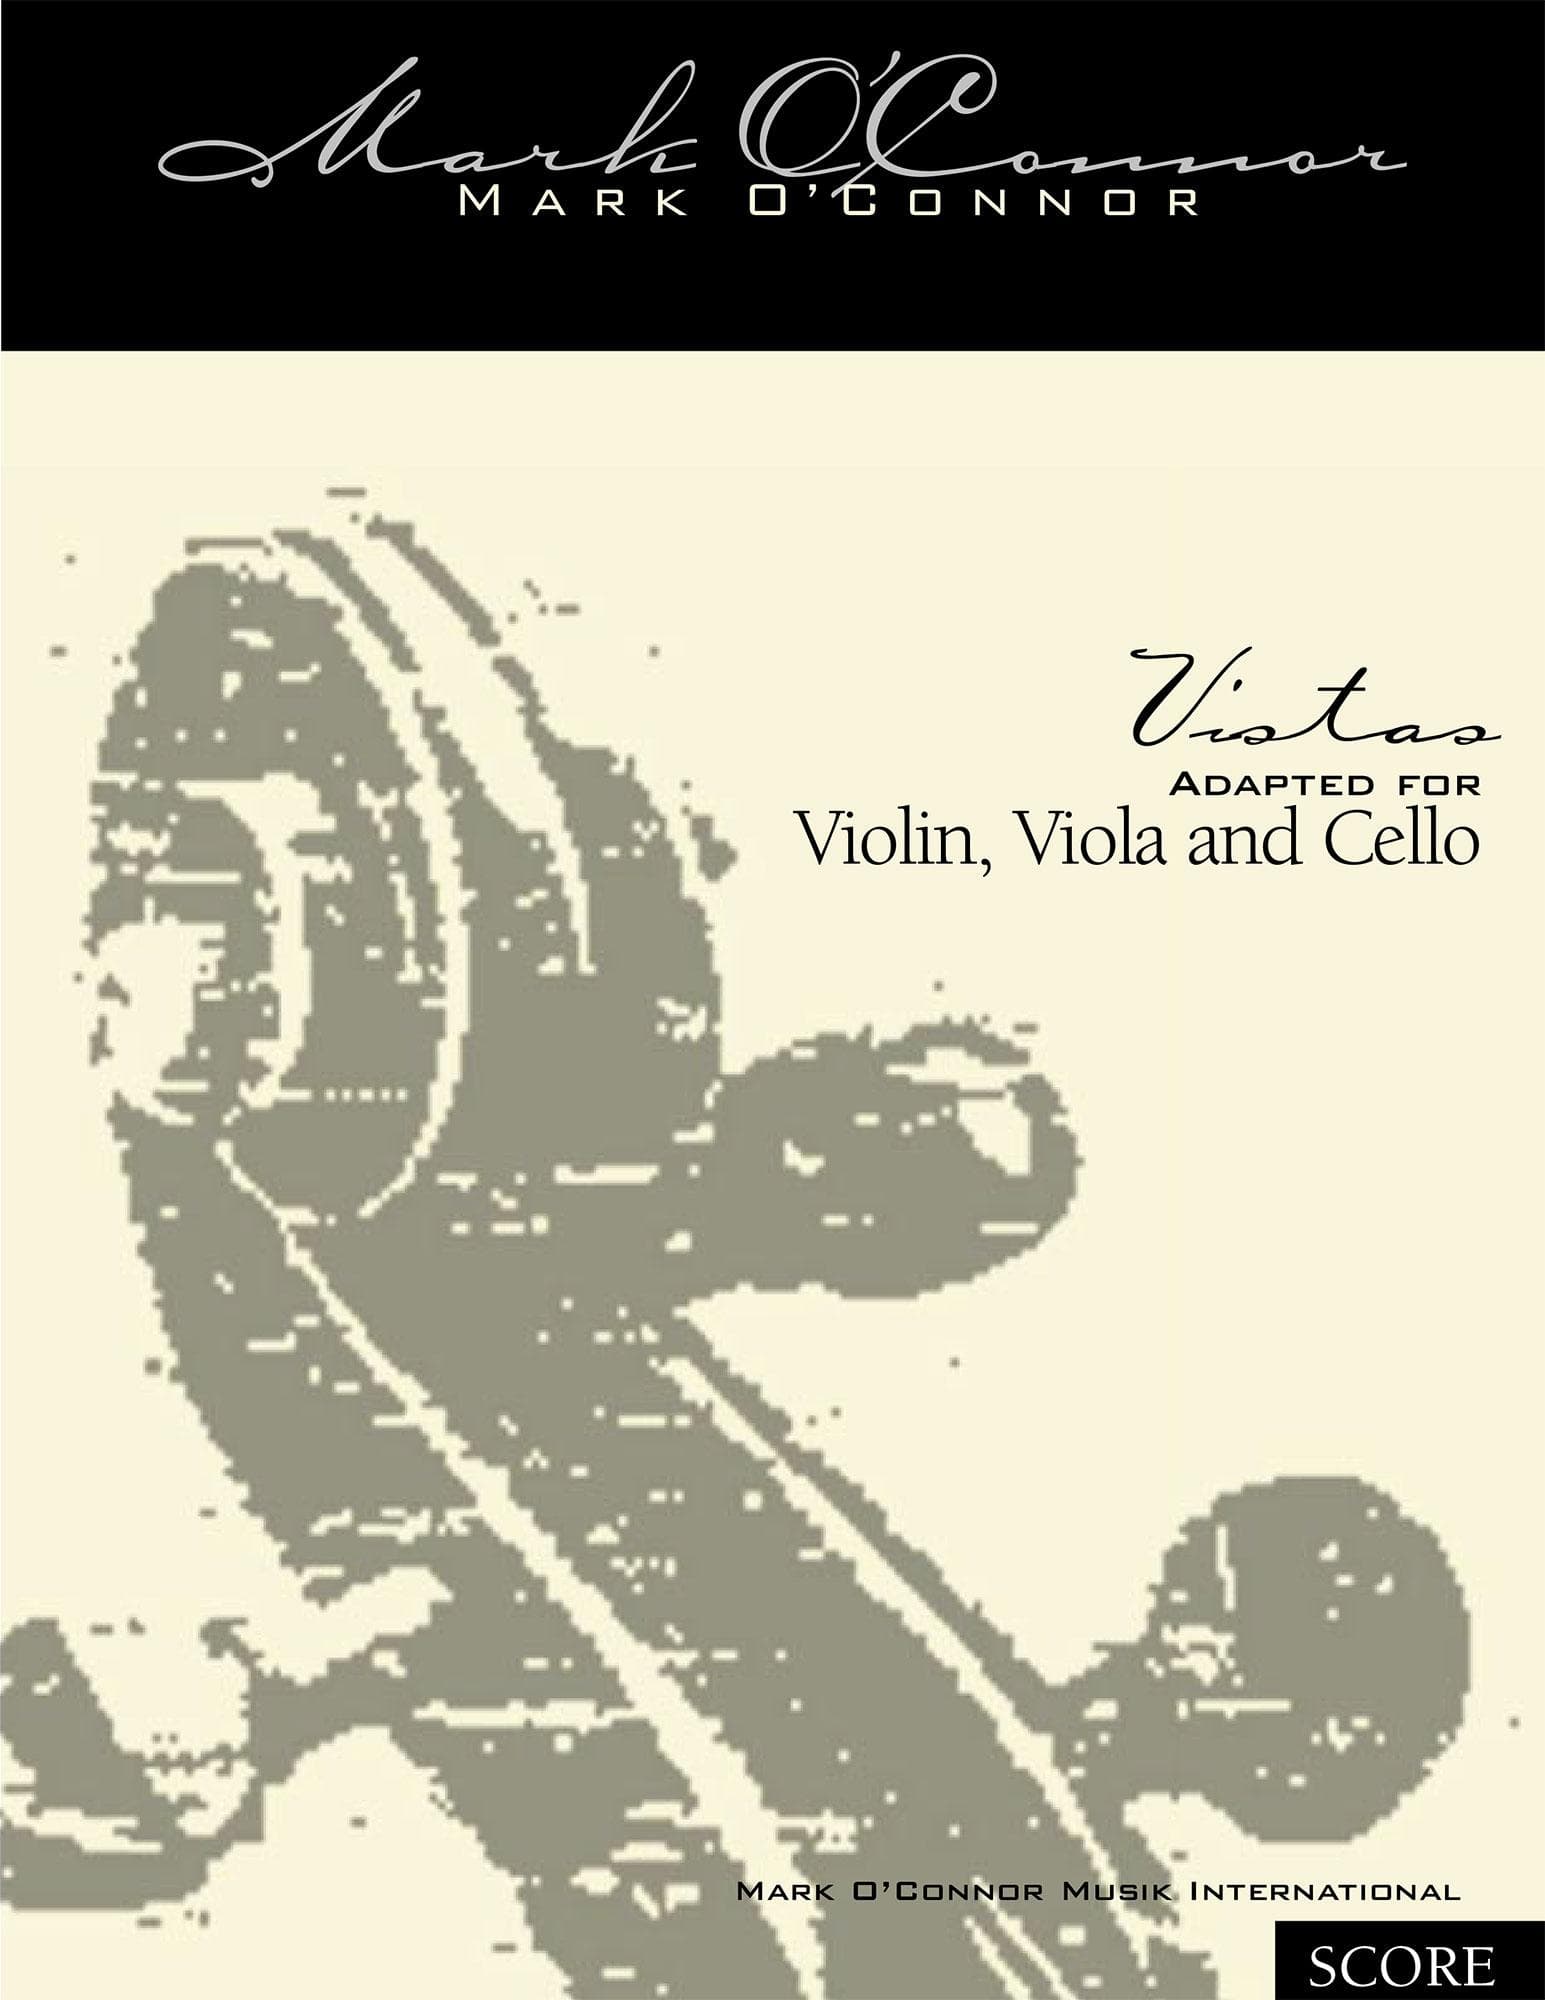 O'Connor, Mark - Vistas for Violin, Viola, and Cello - Score - Digital Download